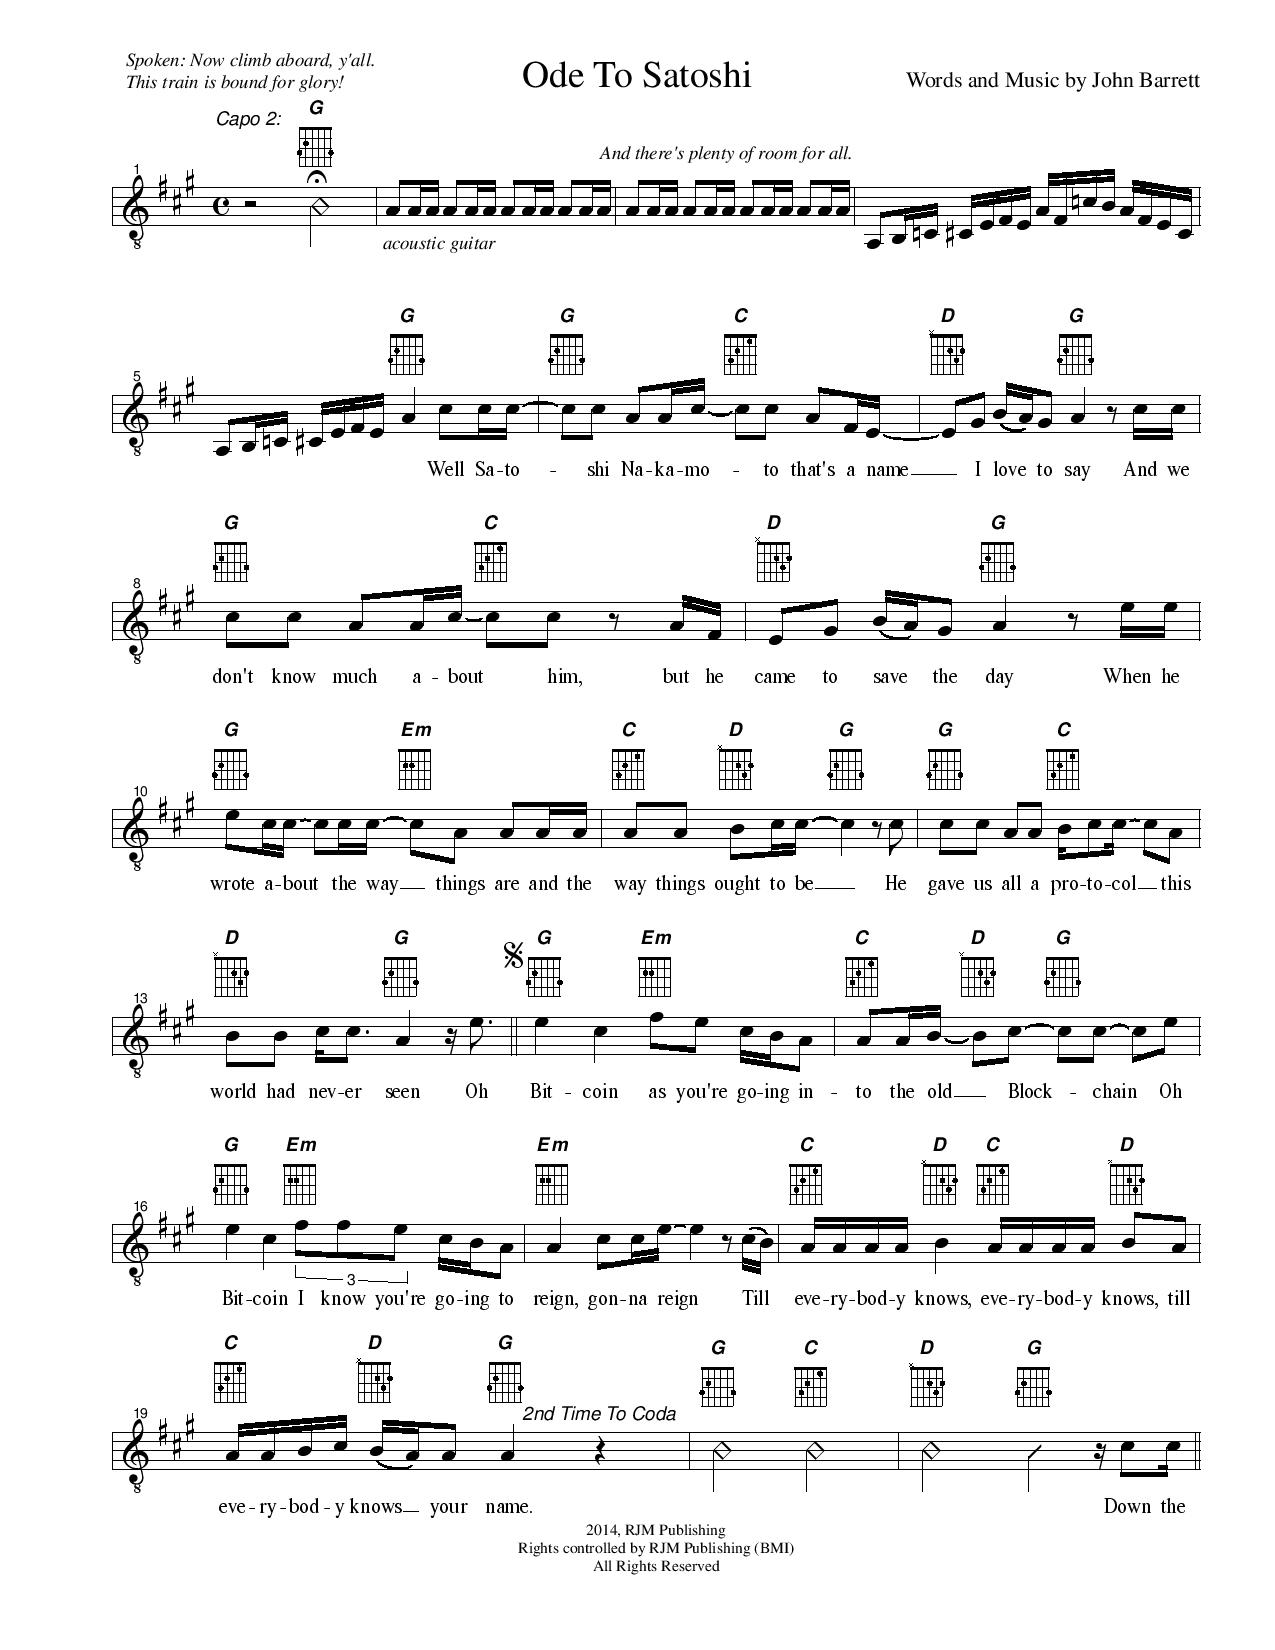 Ode Sheet Music in G-page-001.jpg